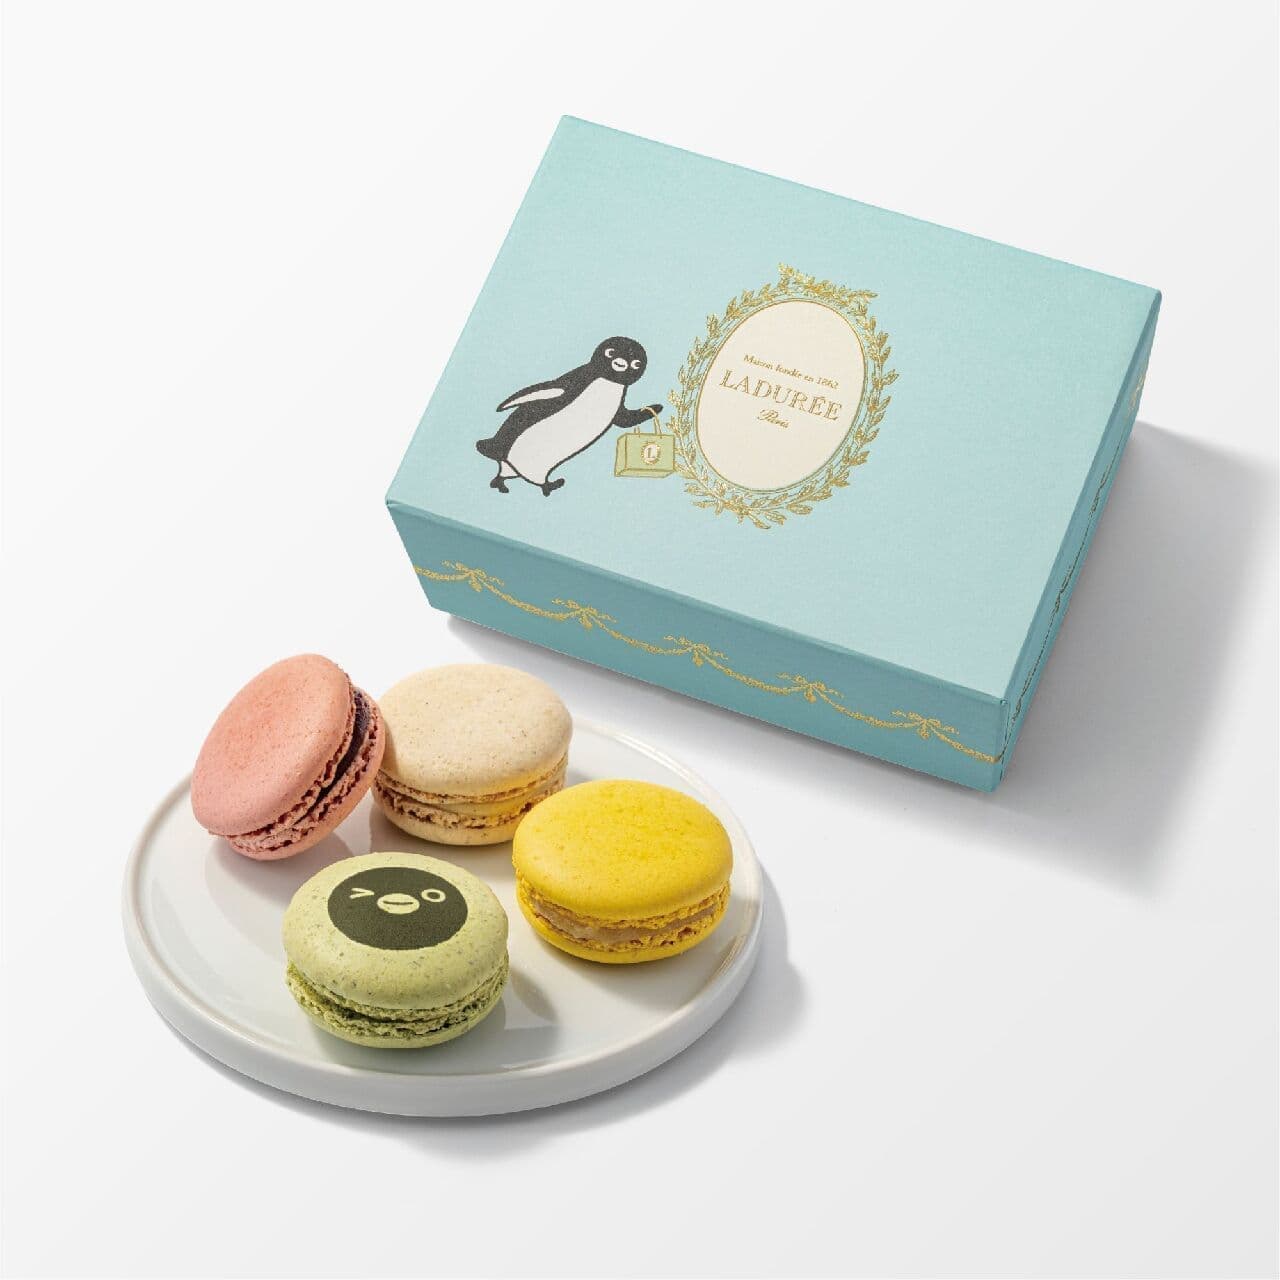 Printed macaroon "Suica's Penguin" (pistache) / Macaron box "Suica's Penguin